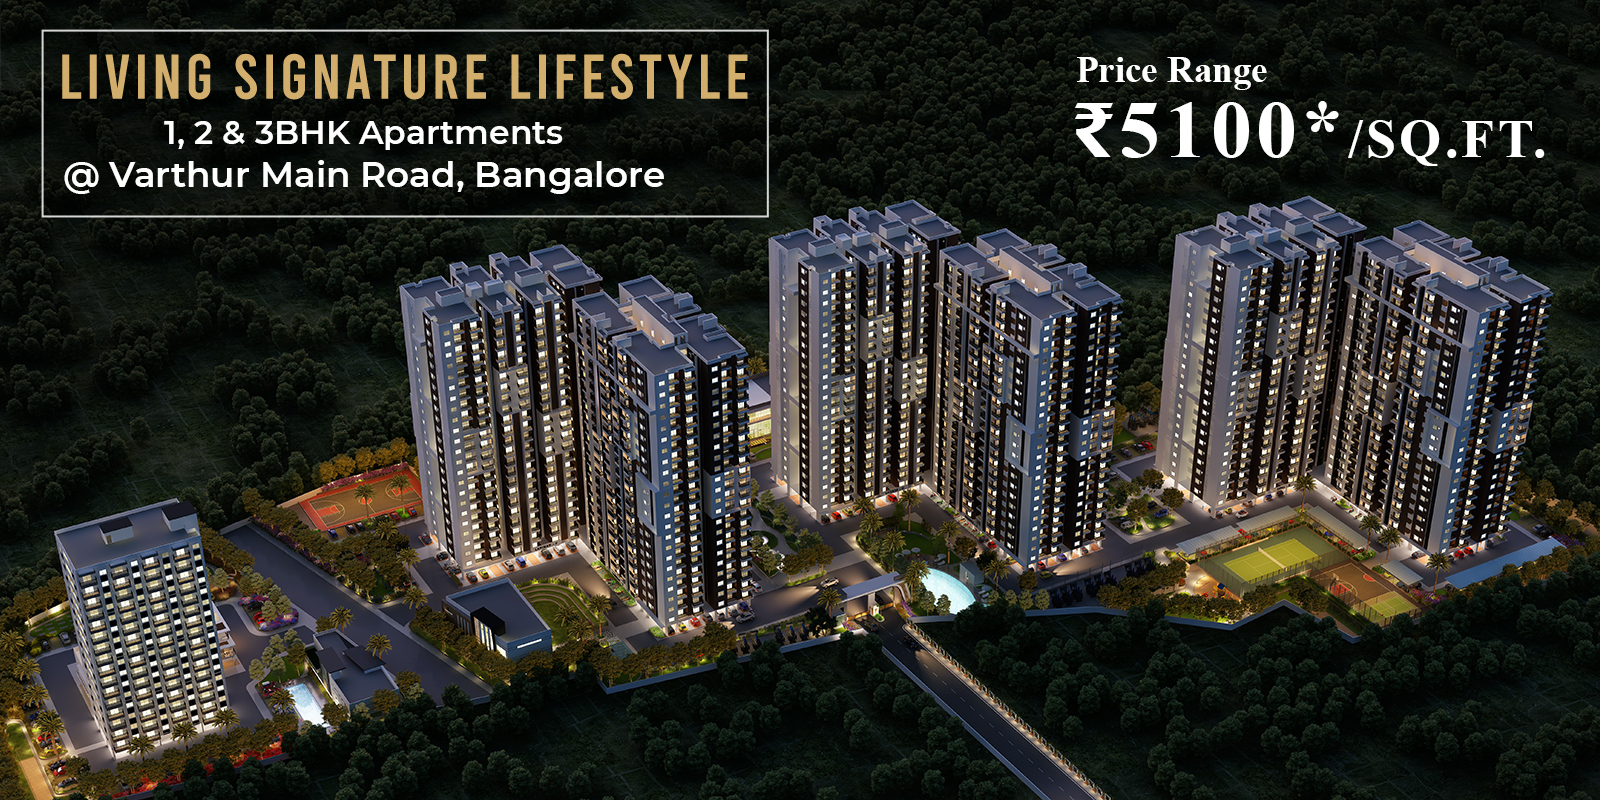 Book 1, 2 and 3 BHK apartments prices range Rs 5100 per Sqft at Candeur Signature, Bangalore Update